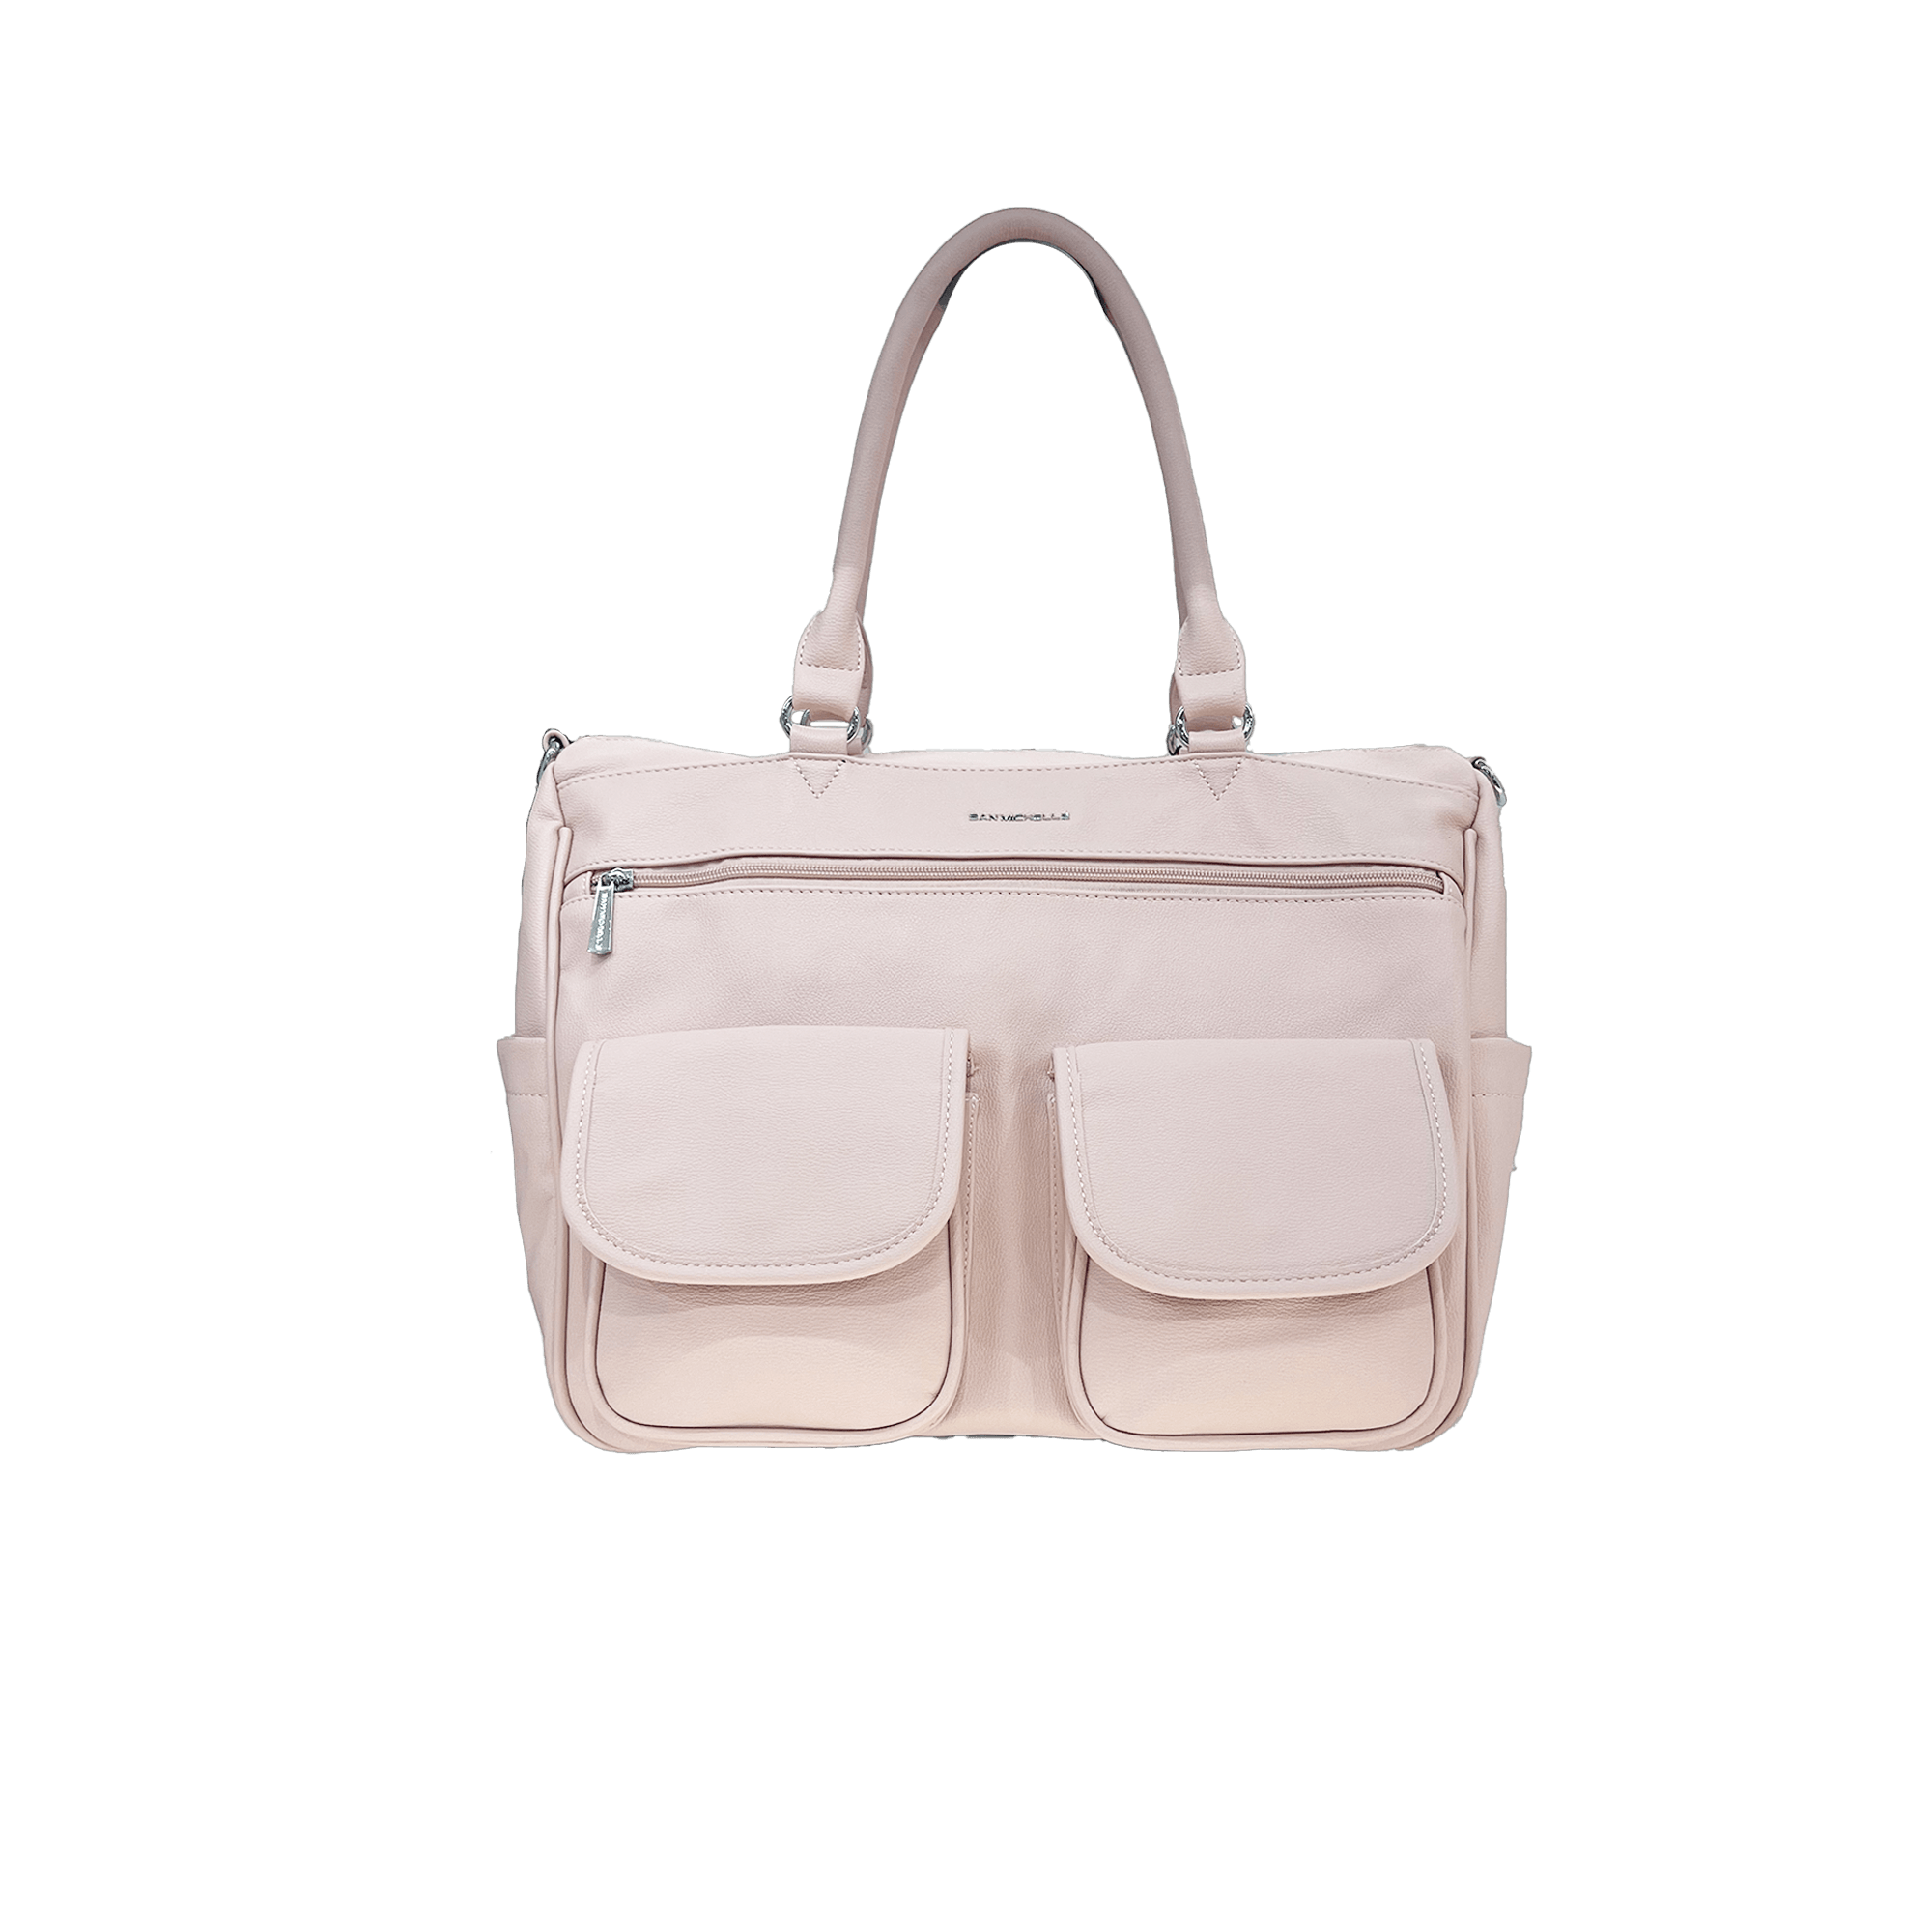 Handbag Size Shopping Bags